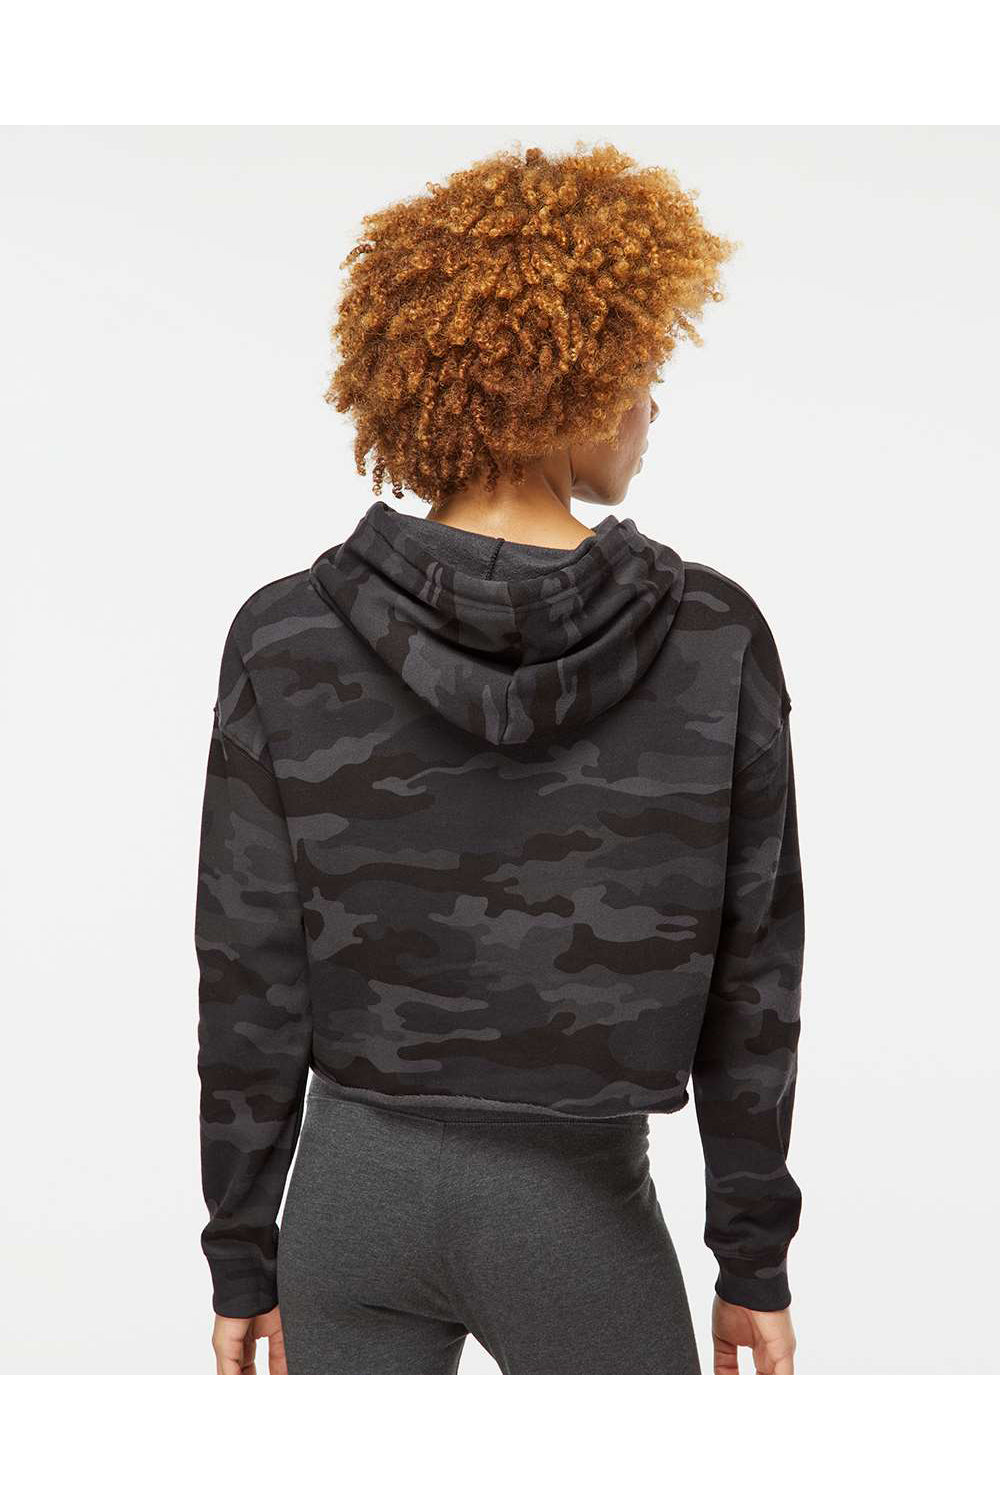 Independent Trading Co. AFX64CRP Womens Crop Hooded Sweatshirt Hoodie Black Camo Model Back